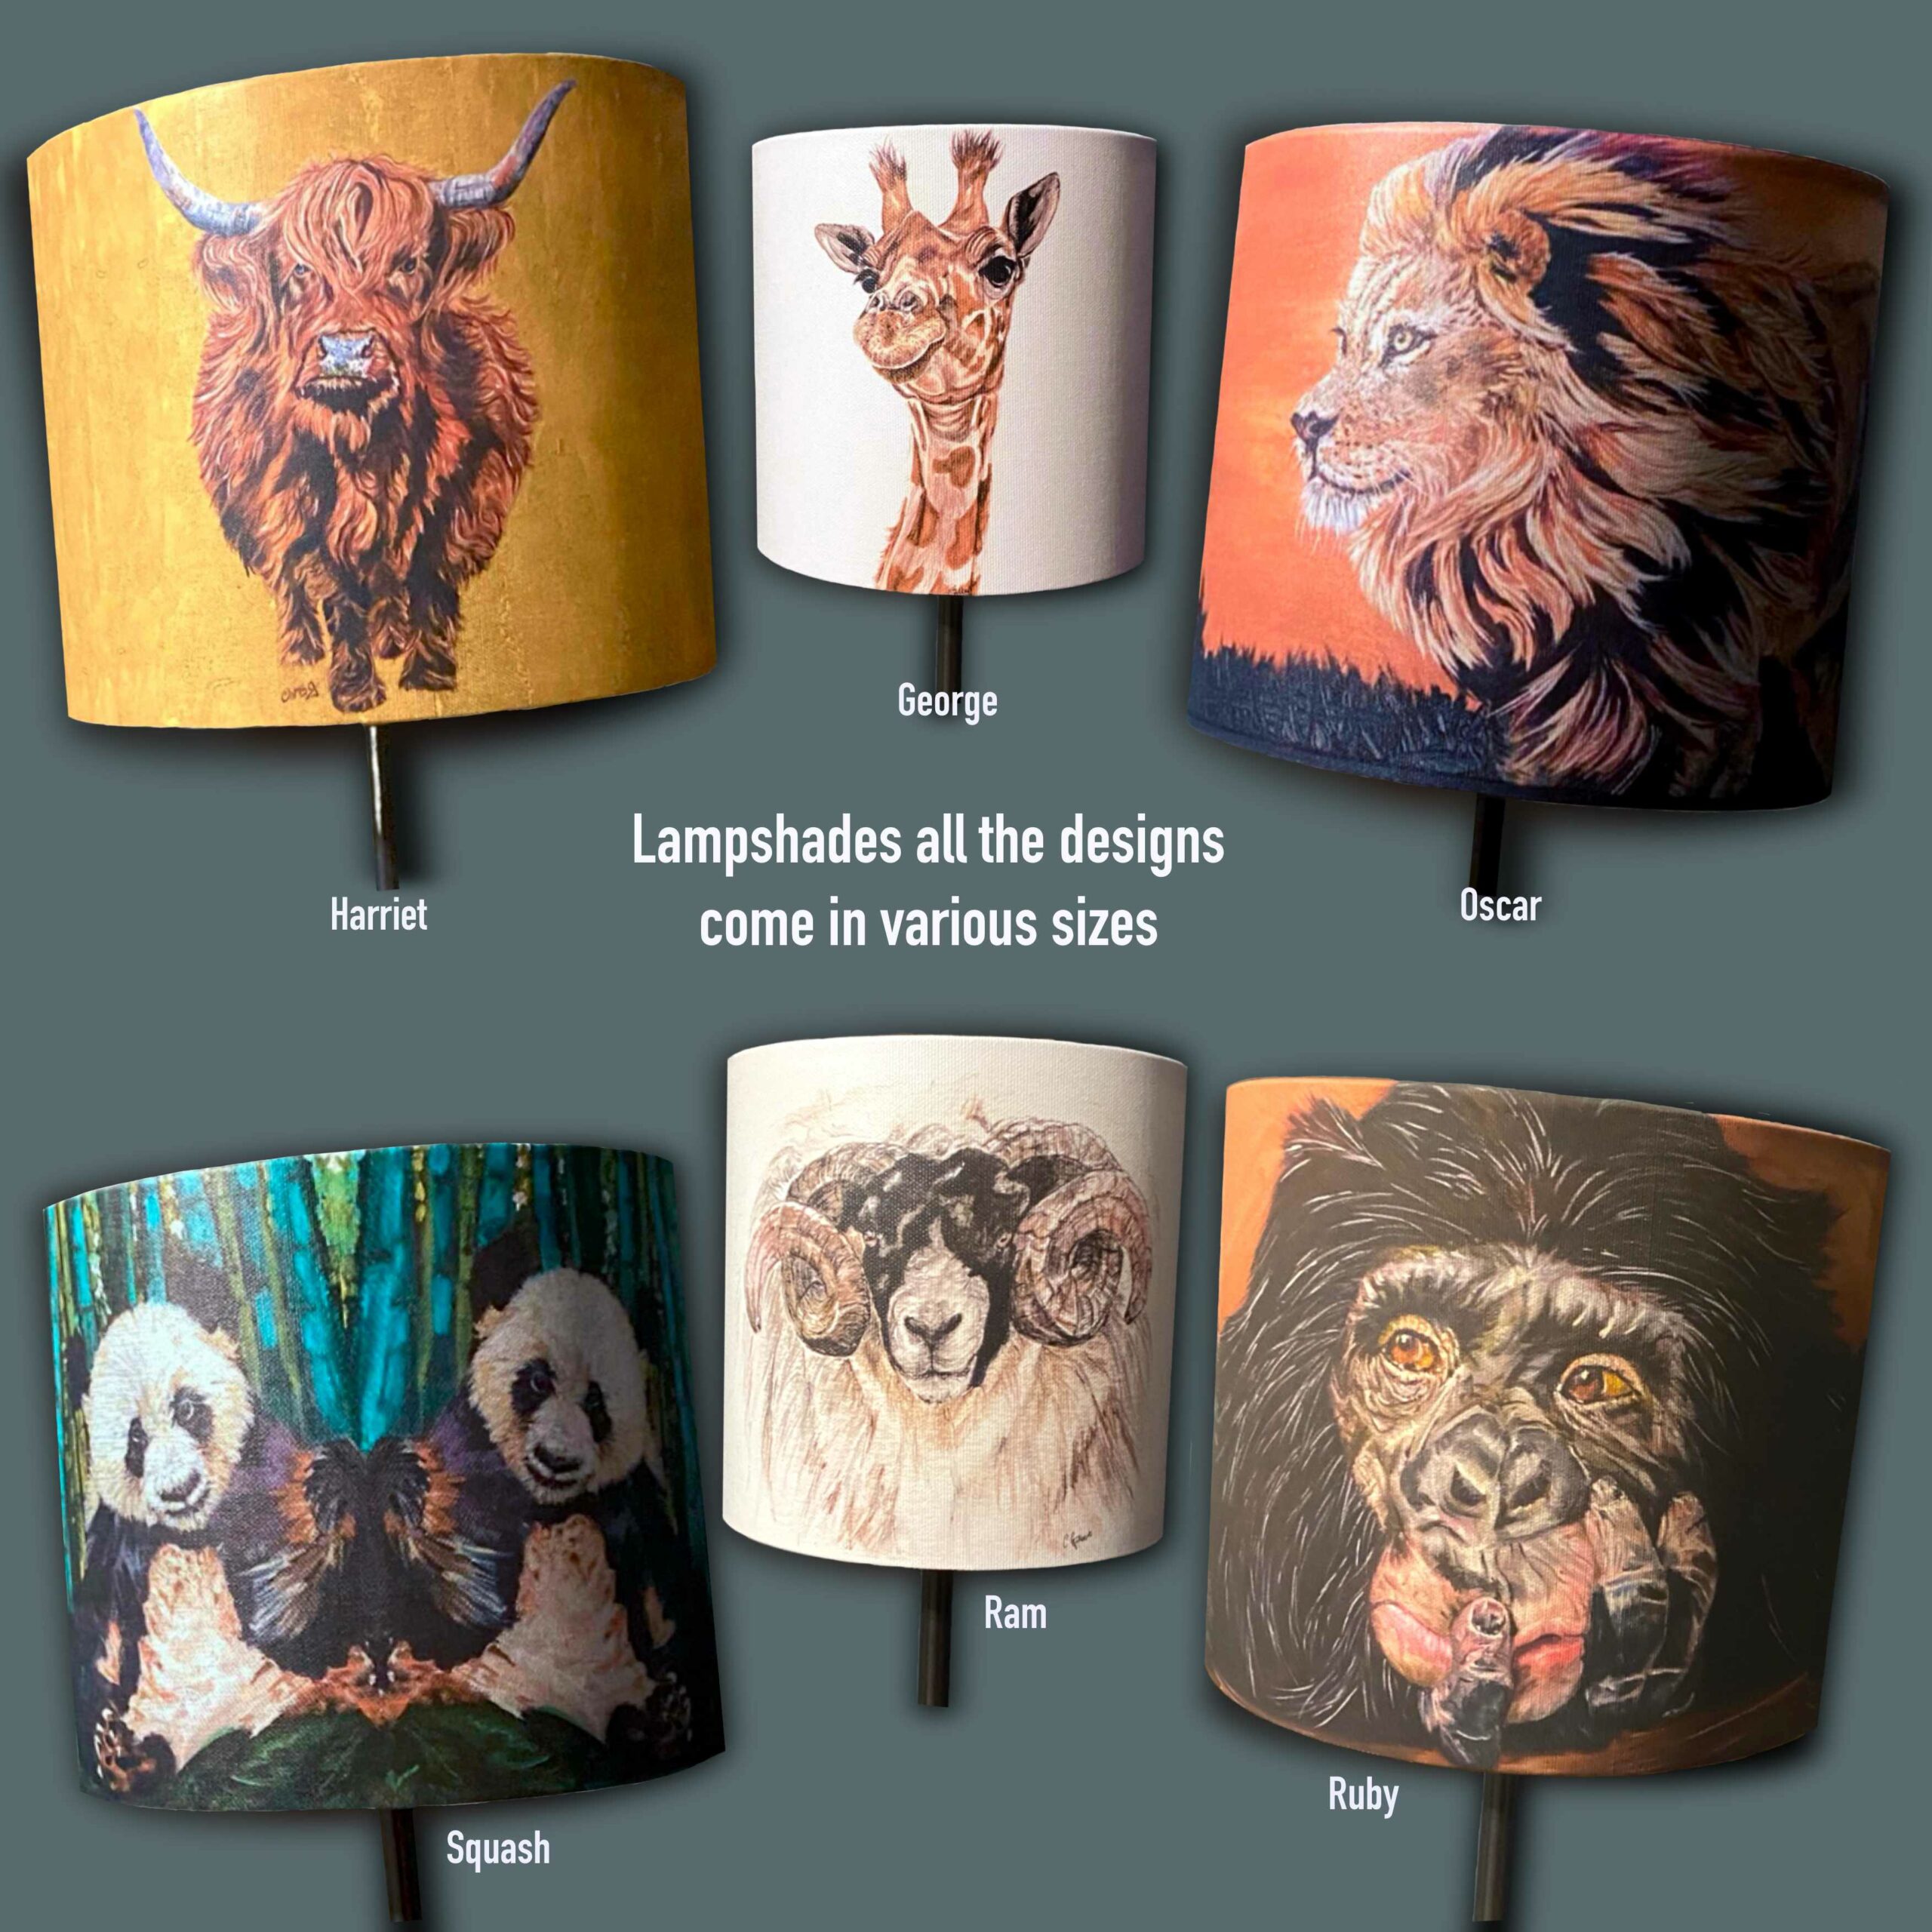 6 different printed lampshades 
Ruby chimp, giant panda, ram, Harriet highland cow, Oscar lion, George giraffe